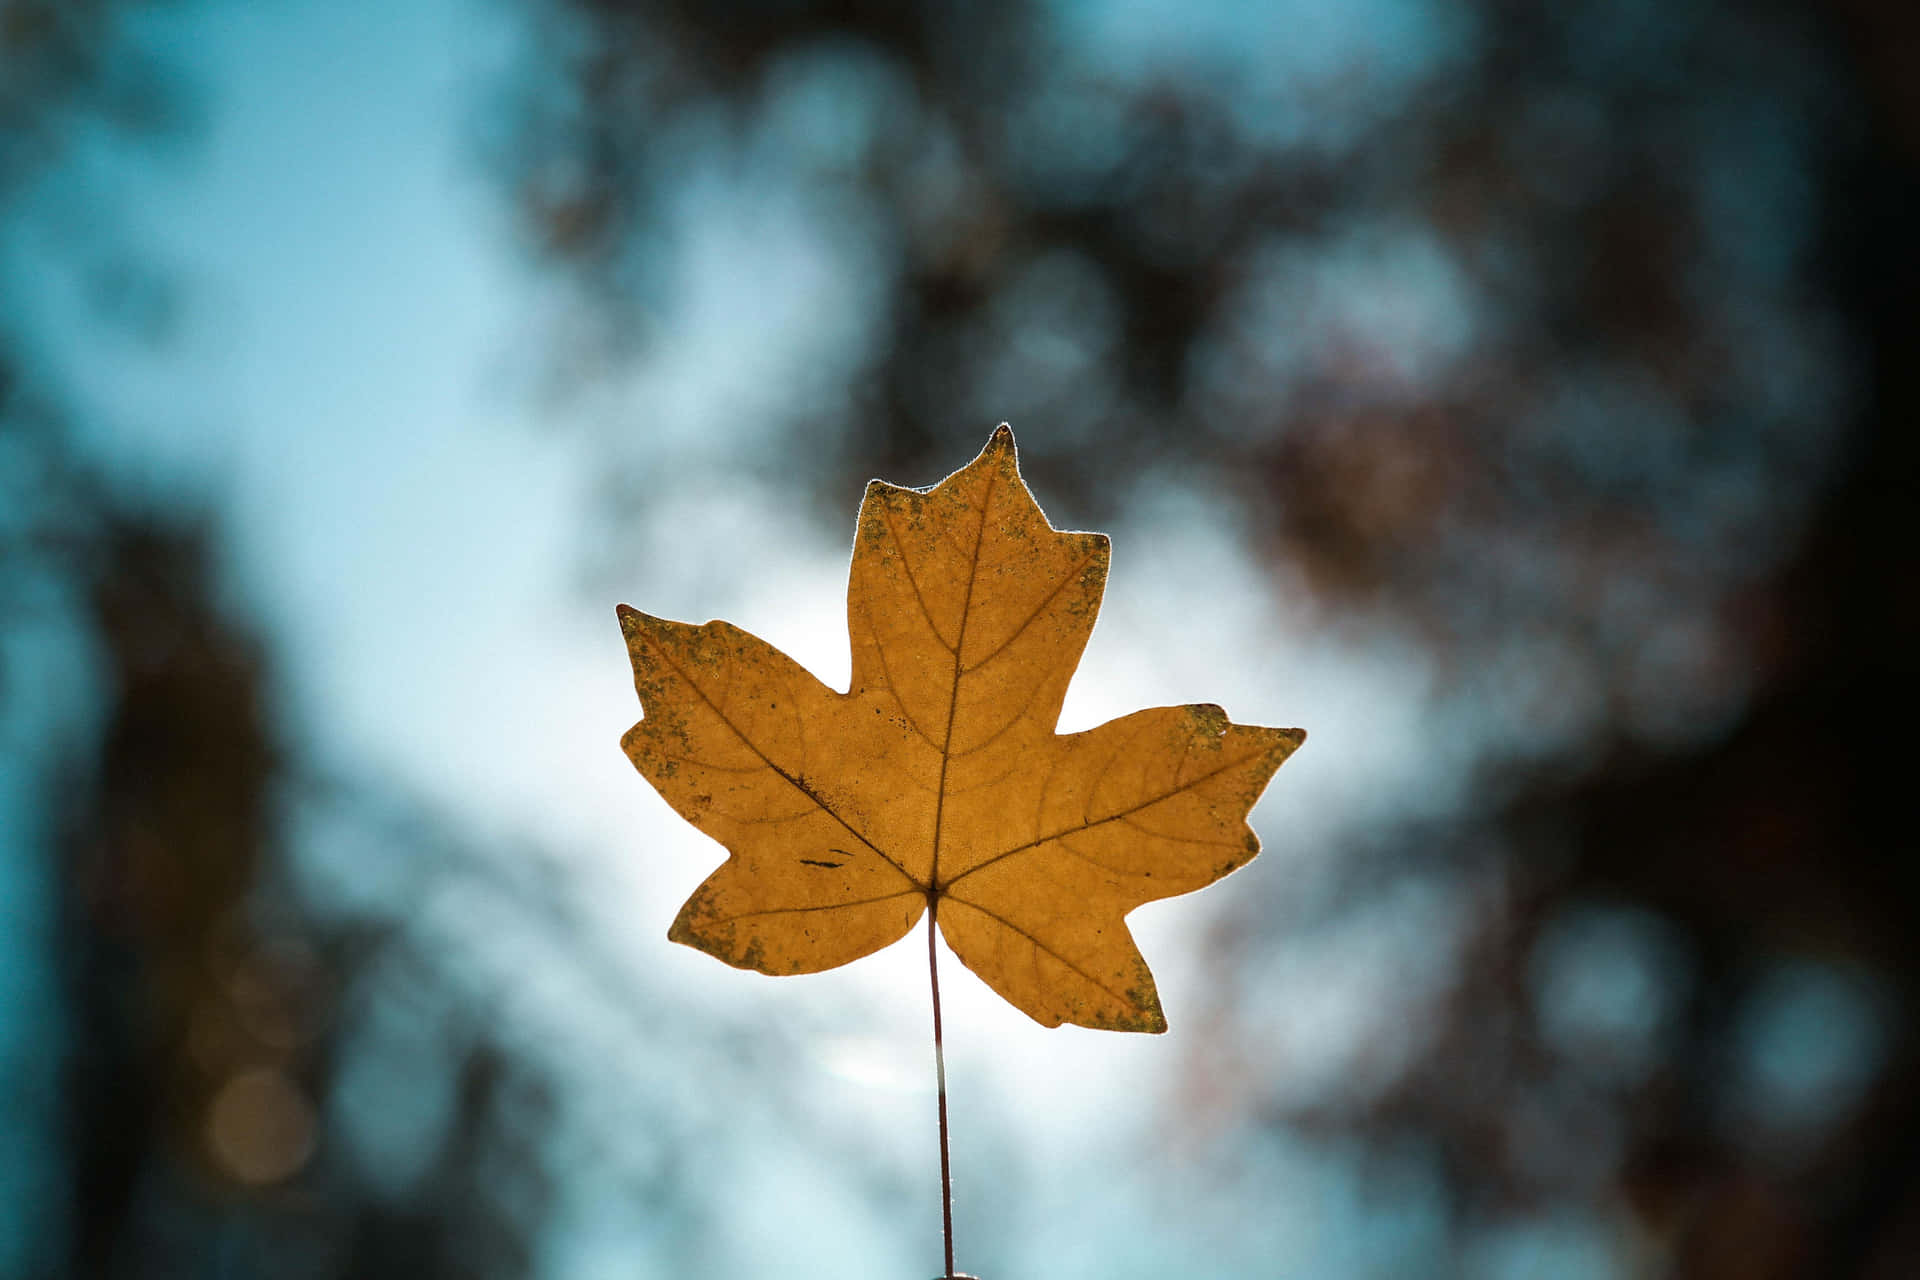 A brilliant, shining maple leaf to represent Canada